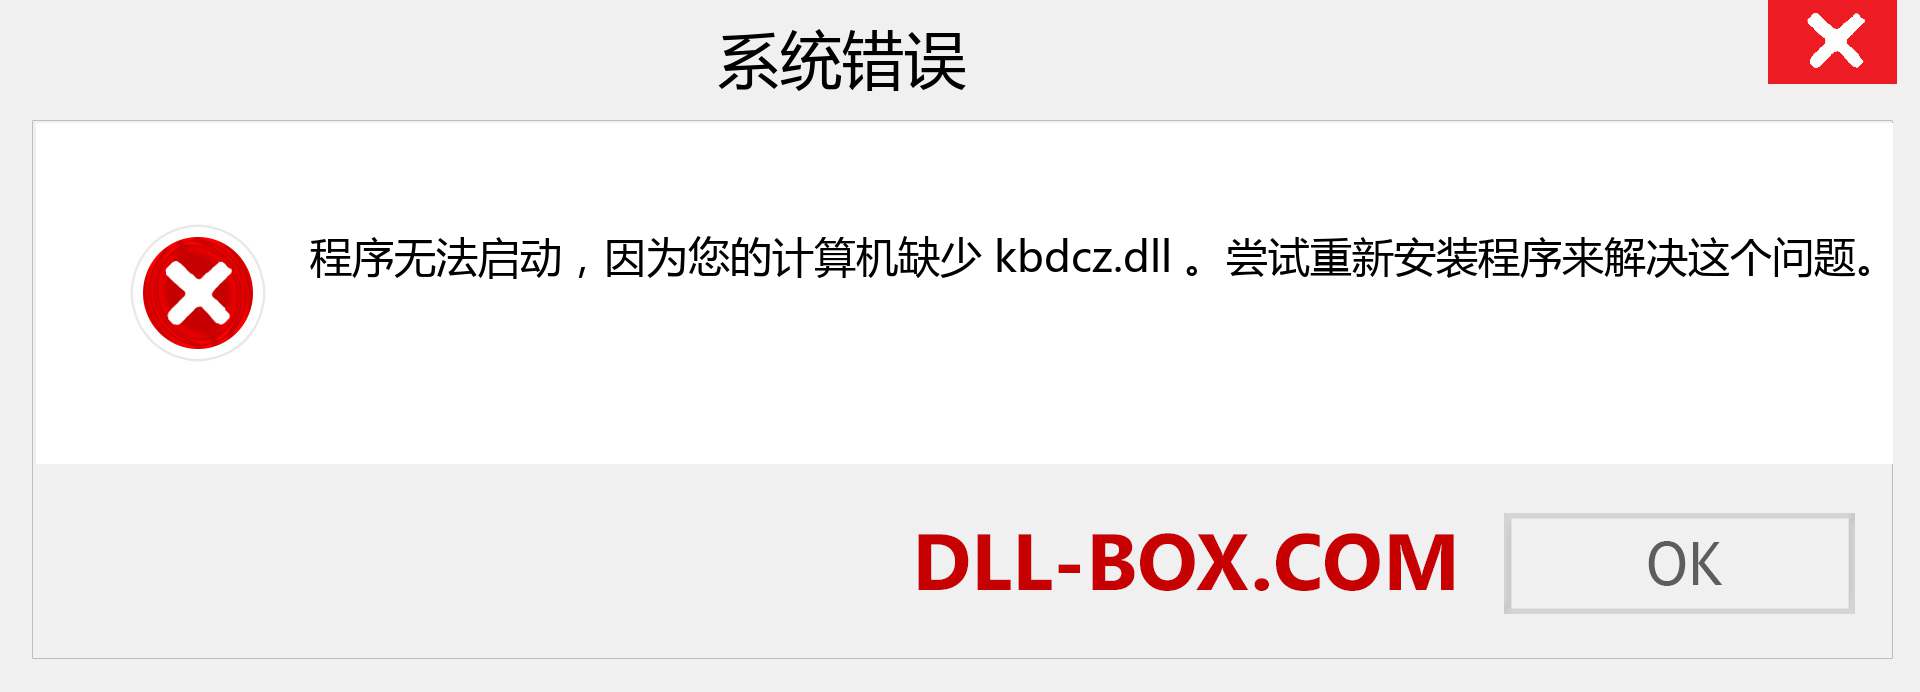 kbdcz.dll 文件丢失？。 适用于 Windows 7、8、10 的下载 - 修复 Windows、照片、图像上的 kbdcz dll 丢失错误